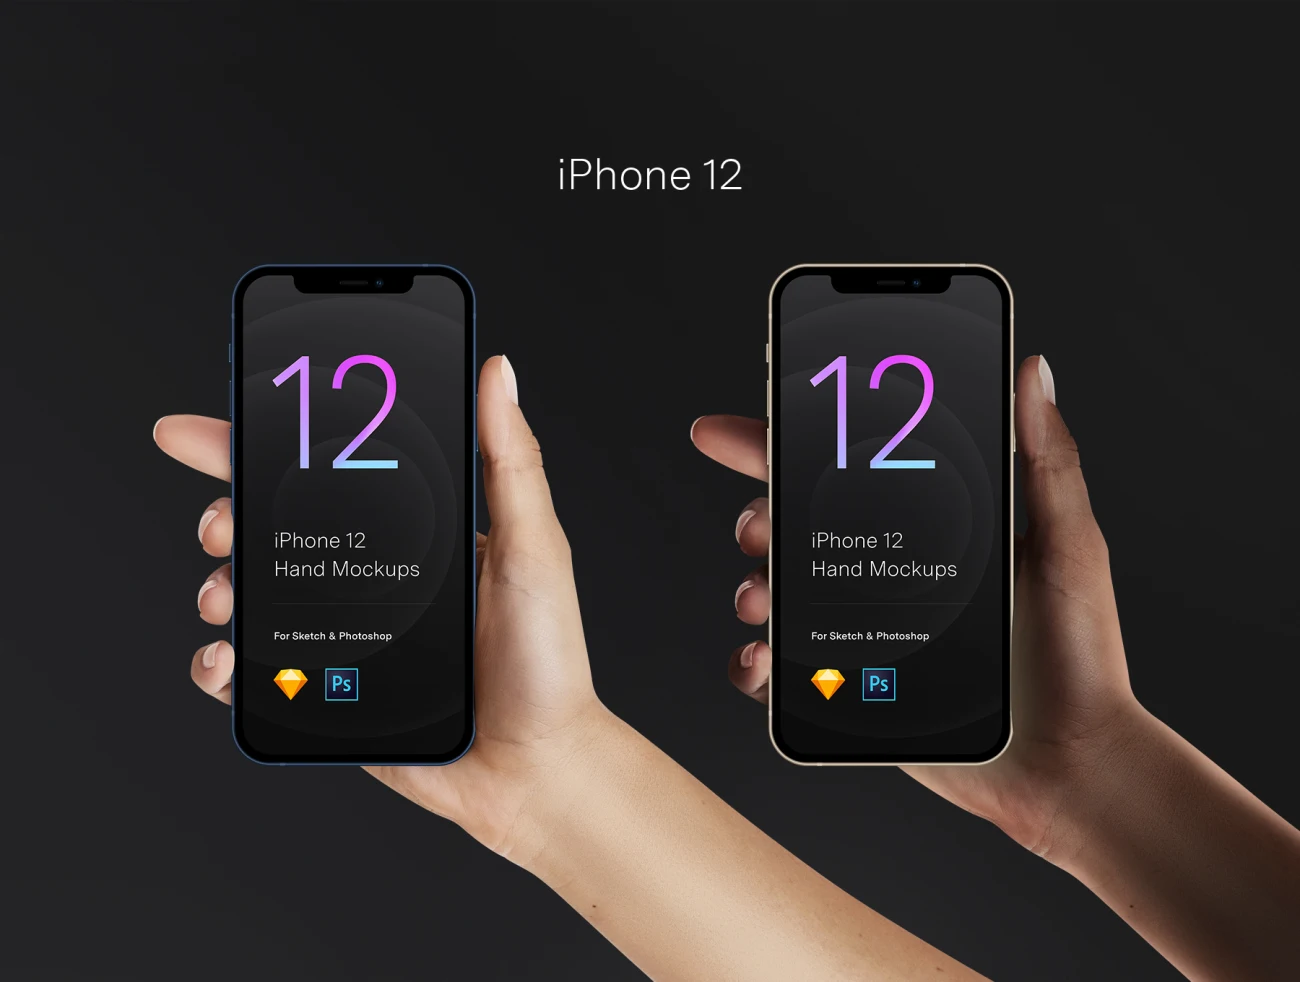 Hands Mockups iPhone 12 Pro _ iPhone 12 手持iPhone 12全系列全色系实景智能样机模型-产品展示、实景样机、手机模型、样机、苹果设备-到位啦UI